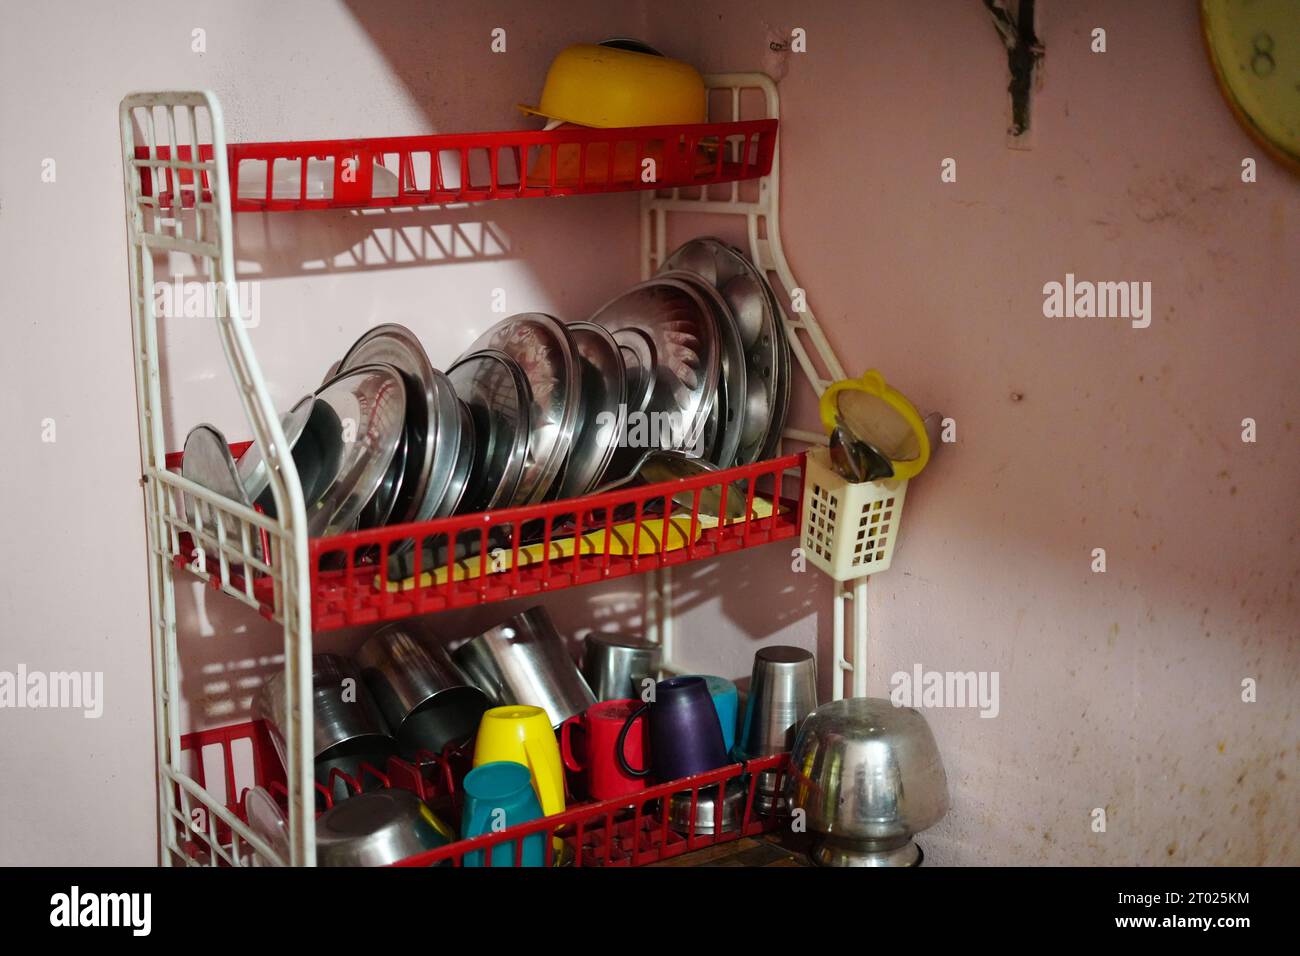 Kitchen utensils used in houses in kerala Stock Photo